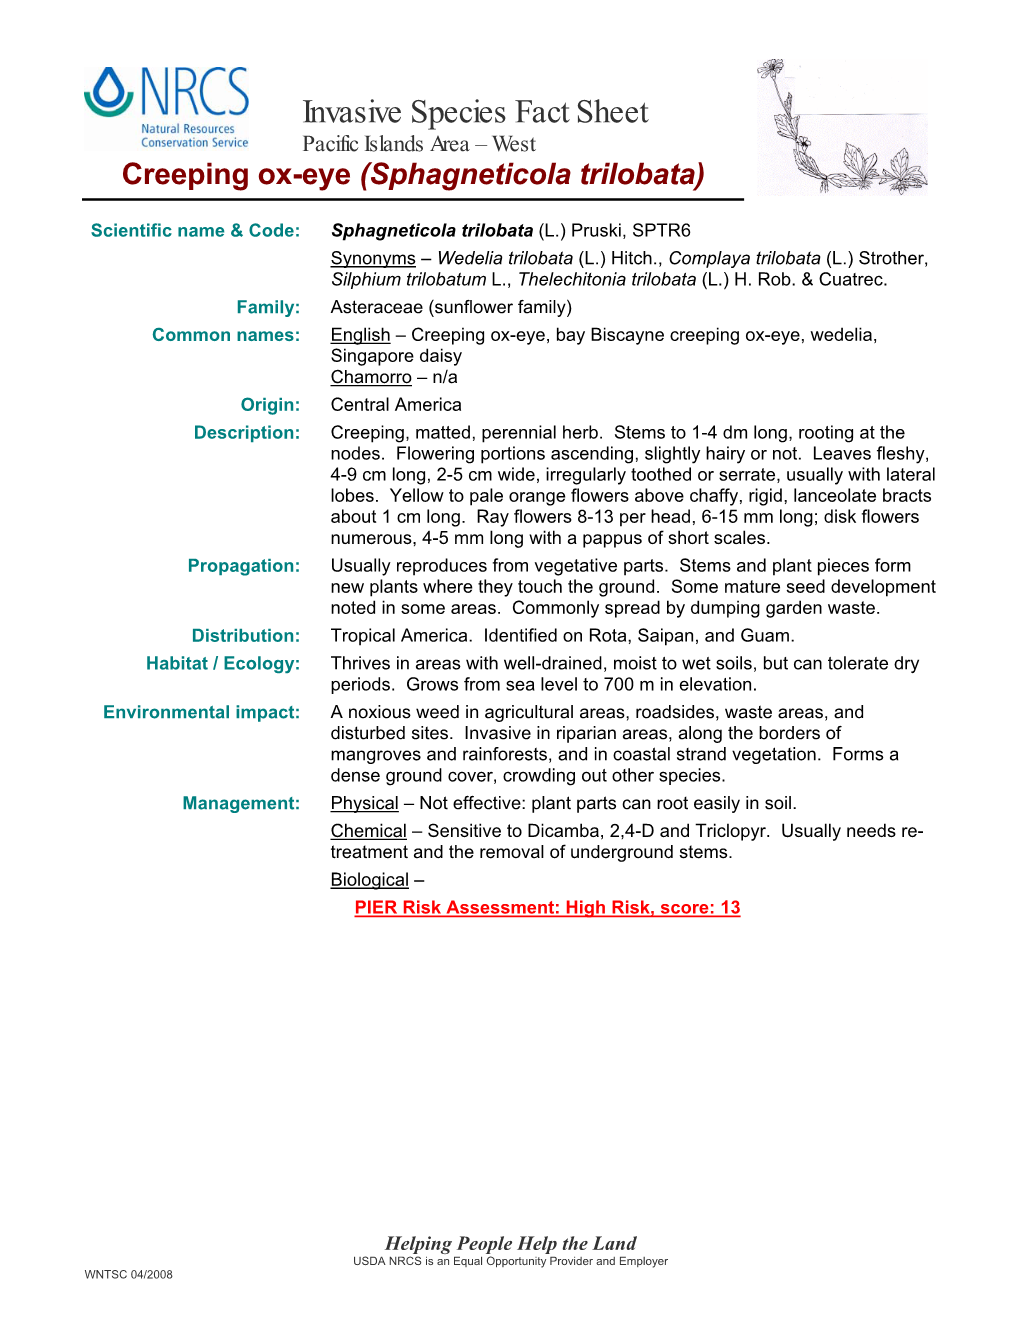 Creeping Ox-Eye (Sphagneticola Trilobata)